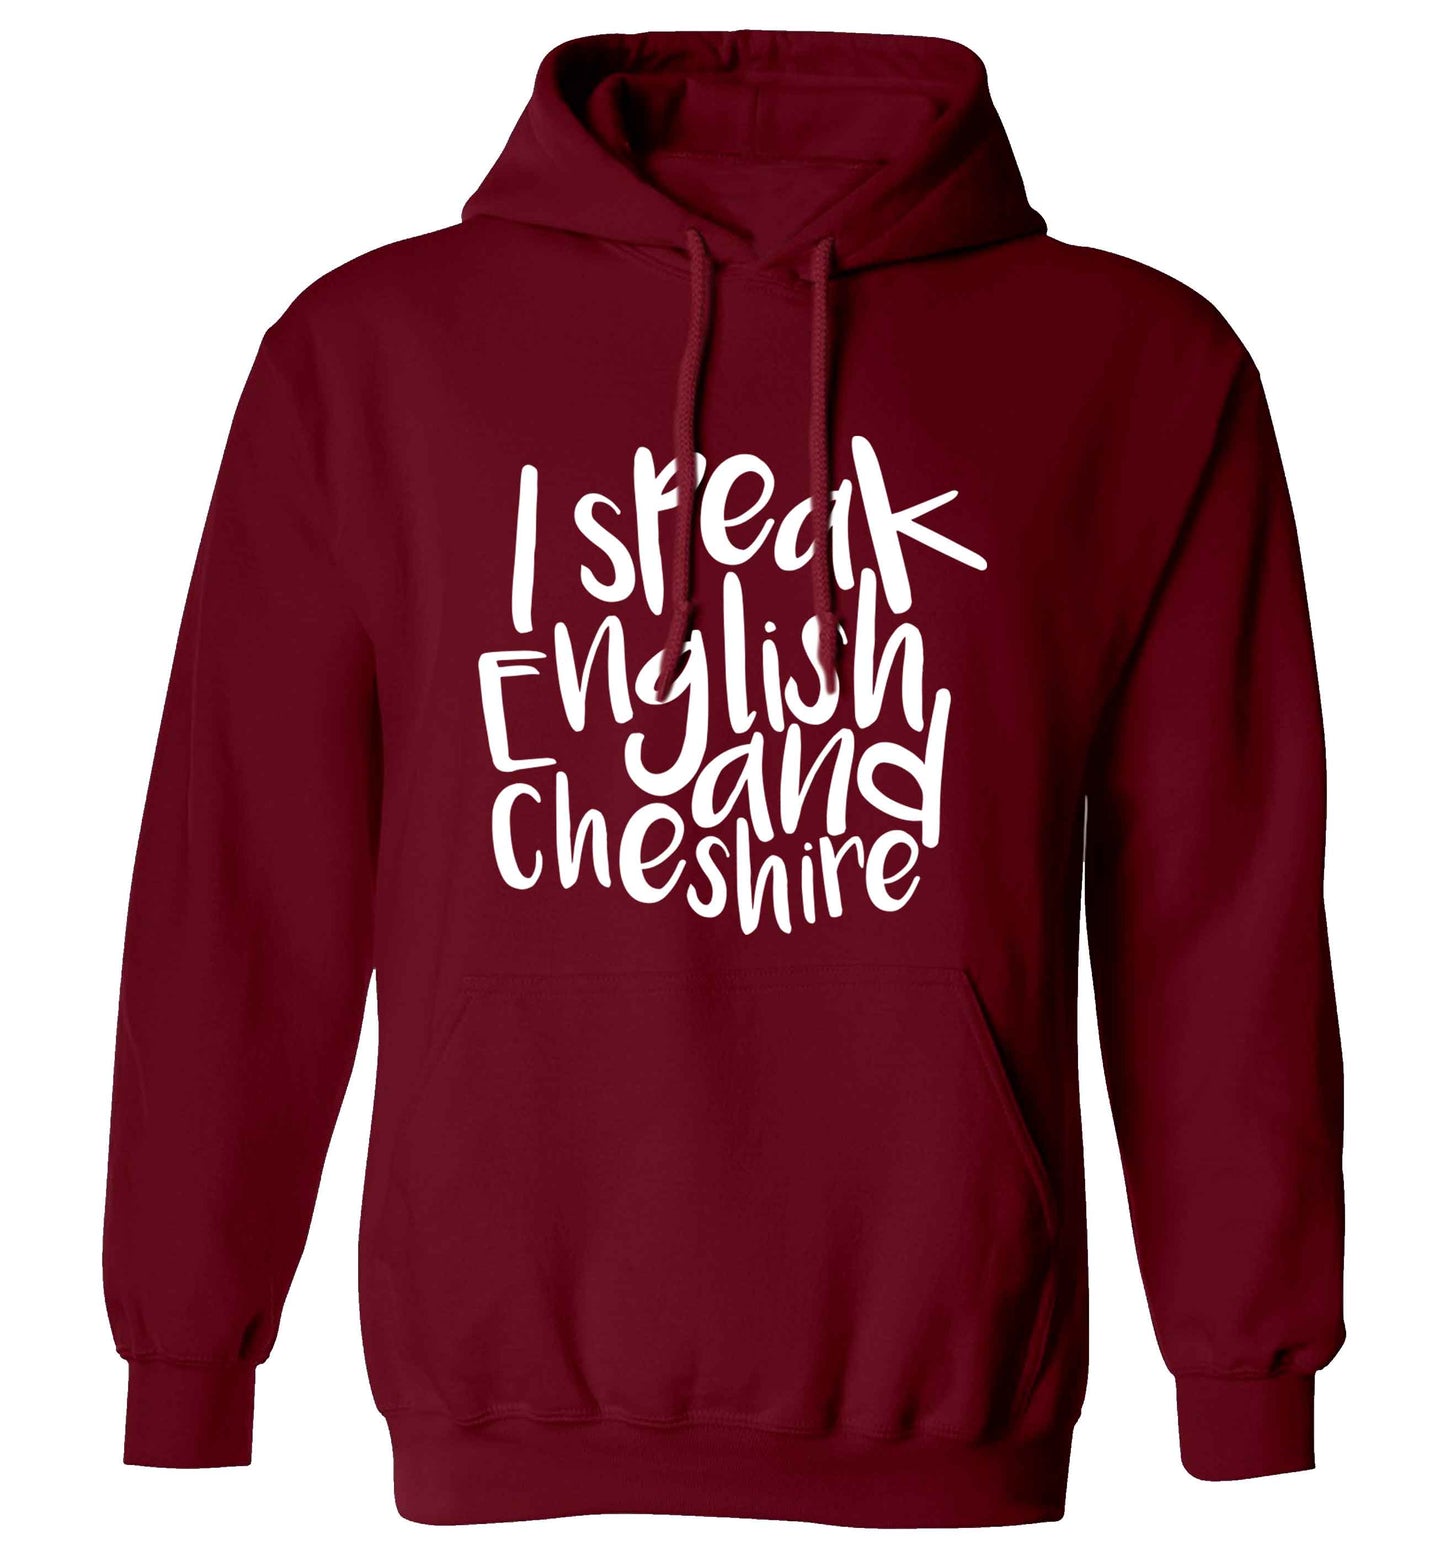 I speak English and Cheshire adults unisex maroon hoodie 2XL